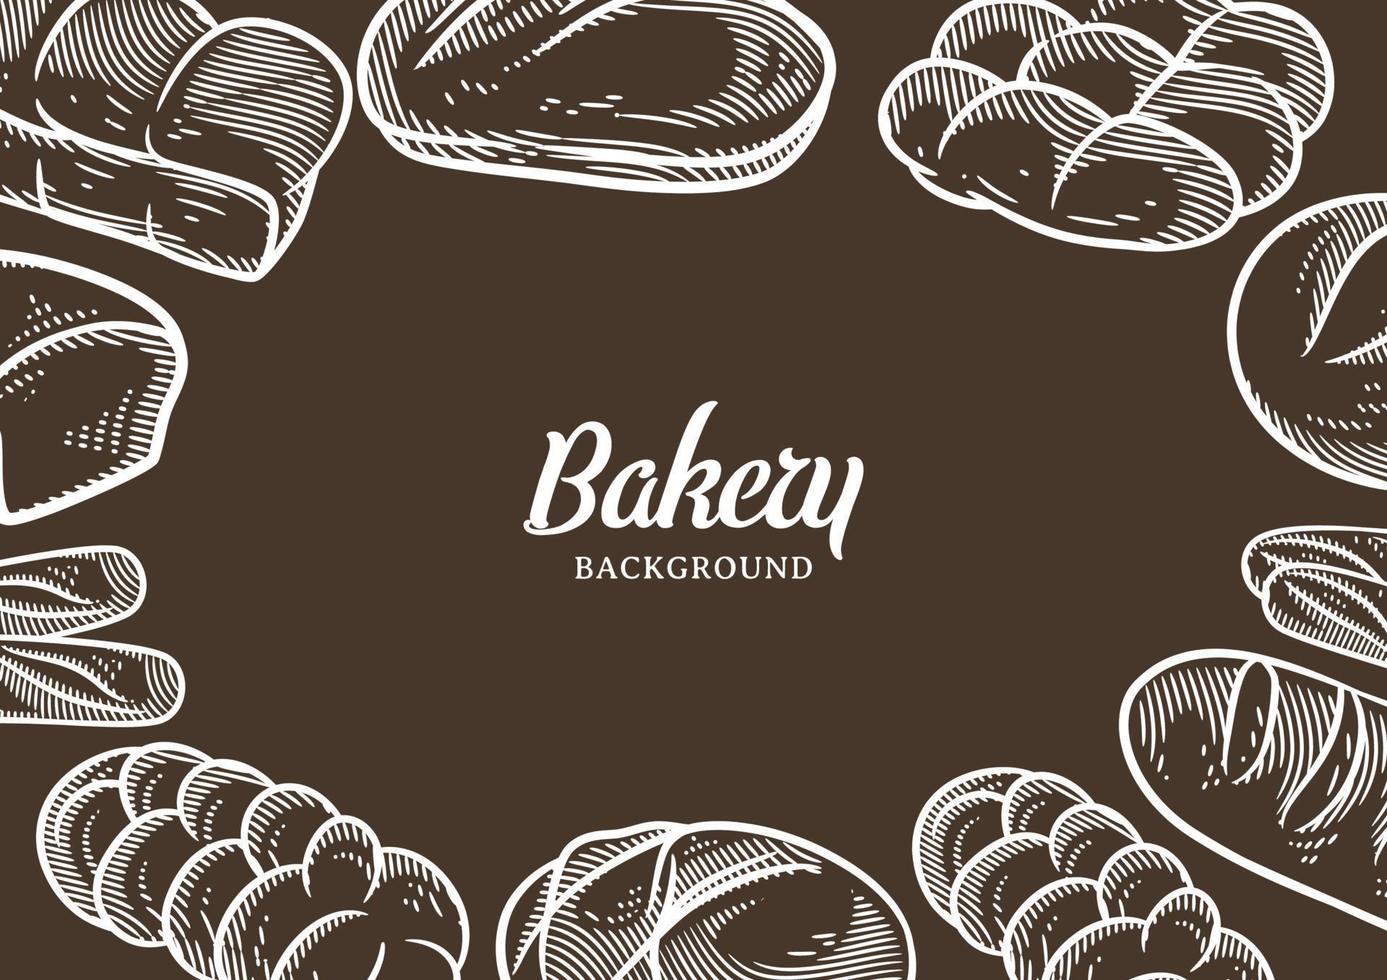 Vintage bakery background with sketched bread vector illustration